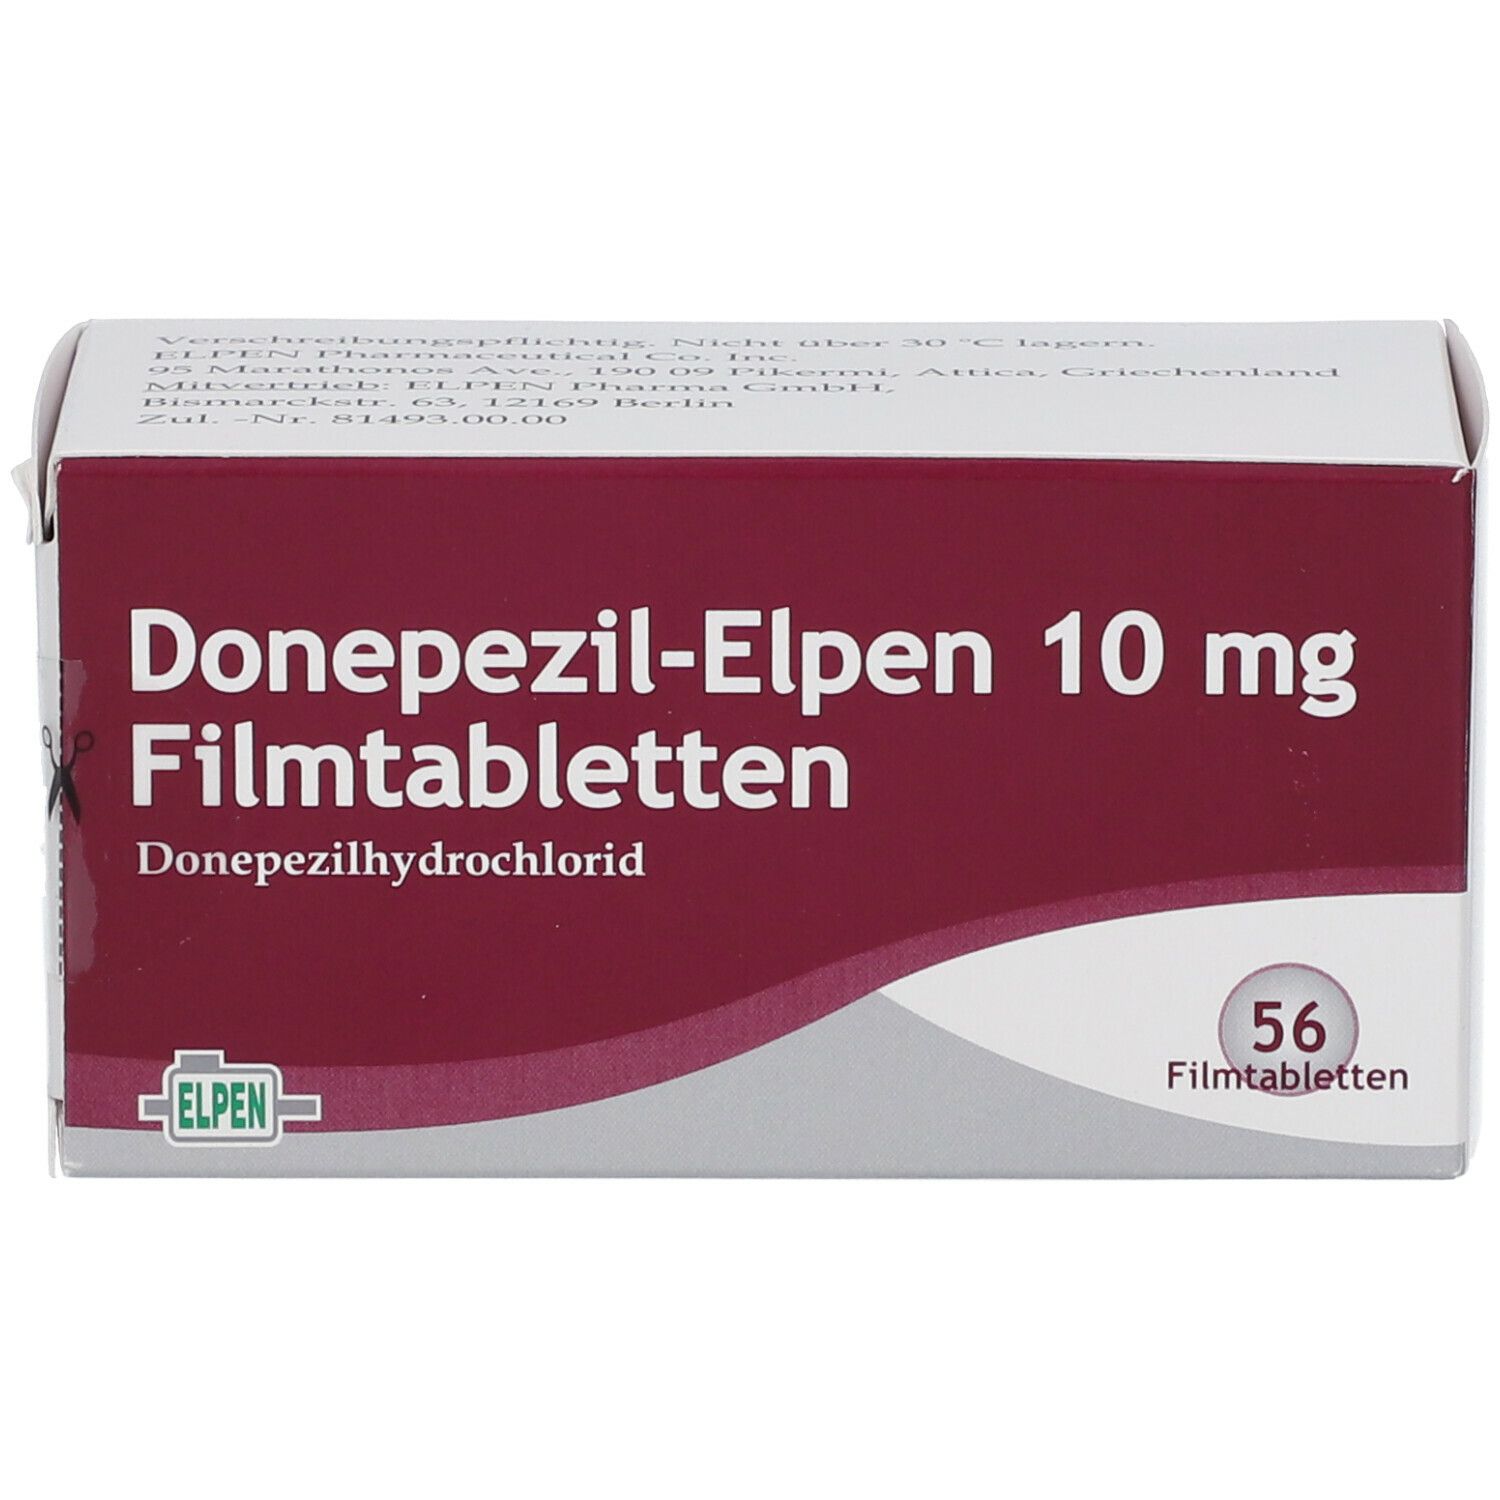 Donepezil-Elpen 10 mg